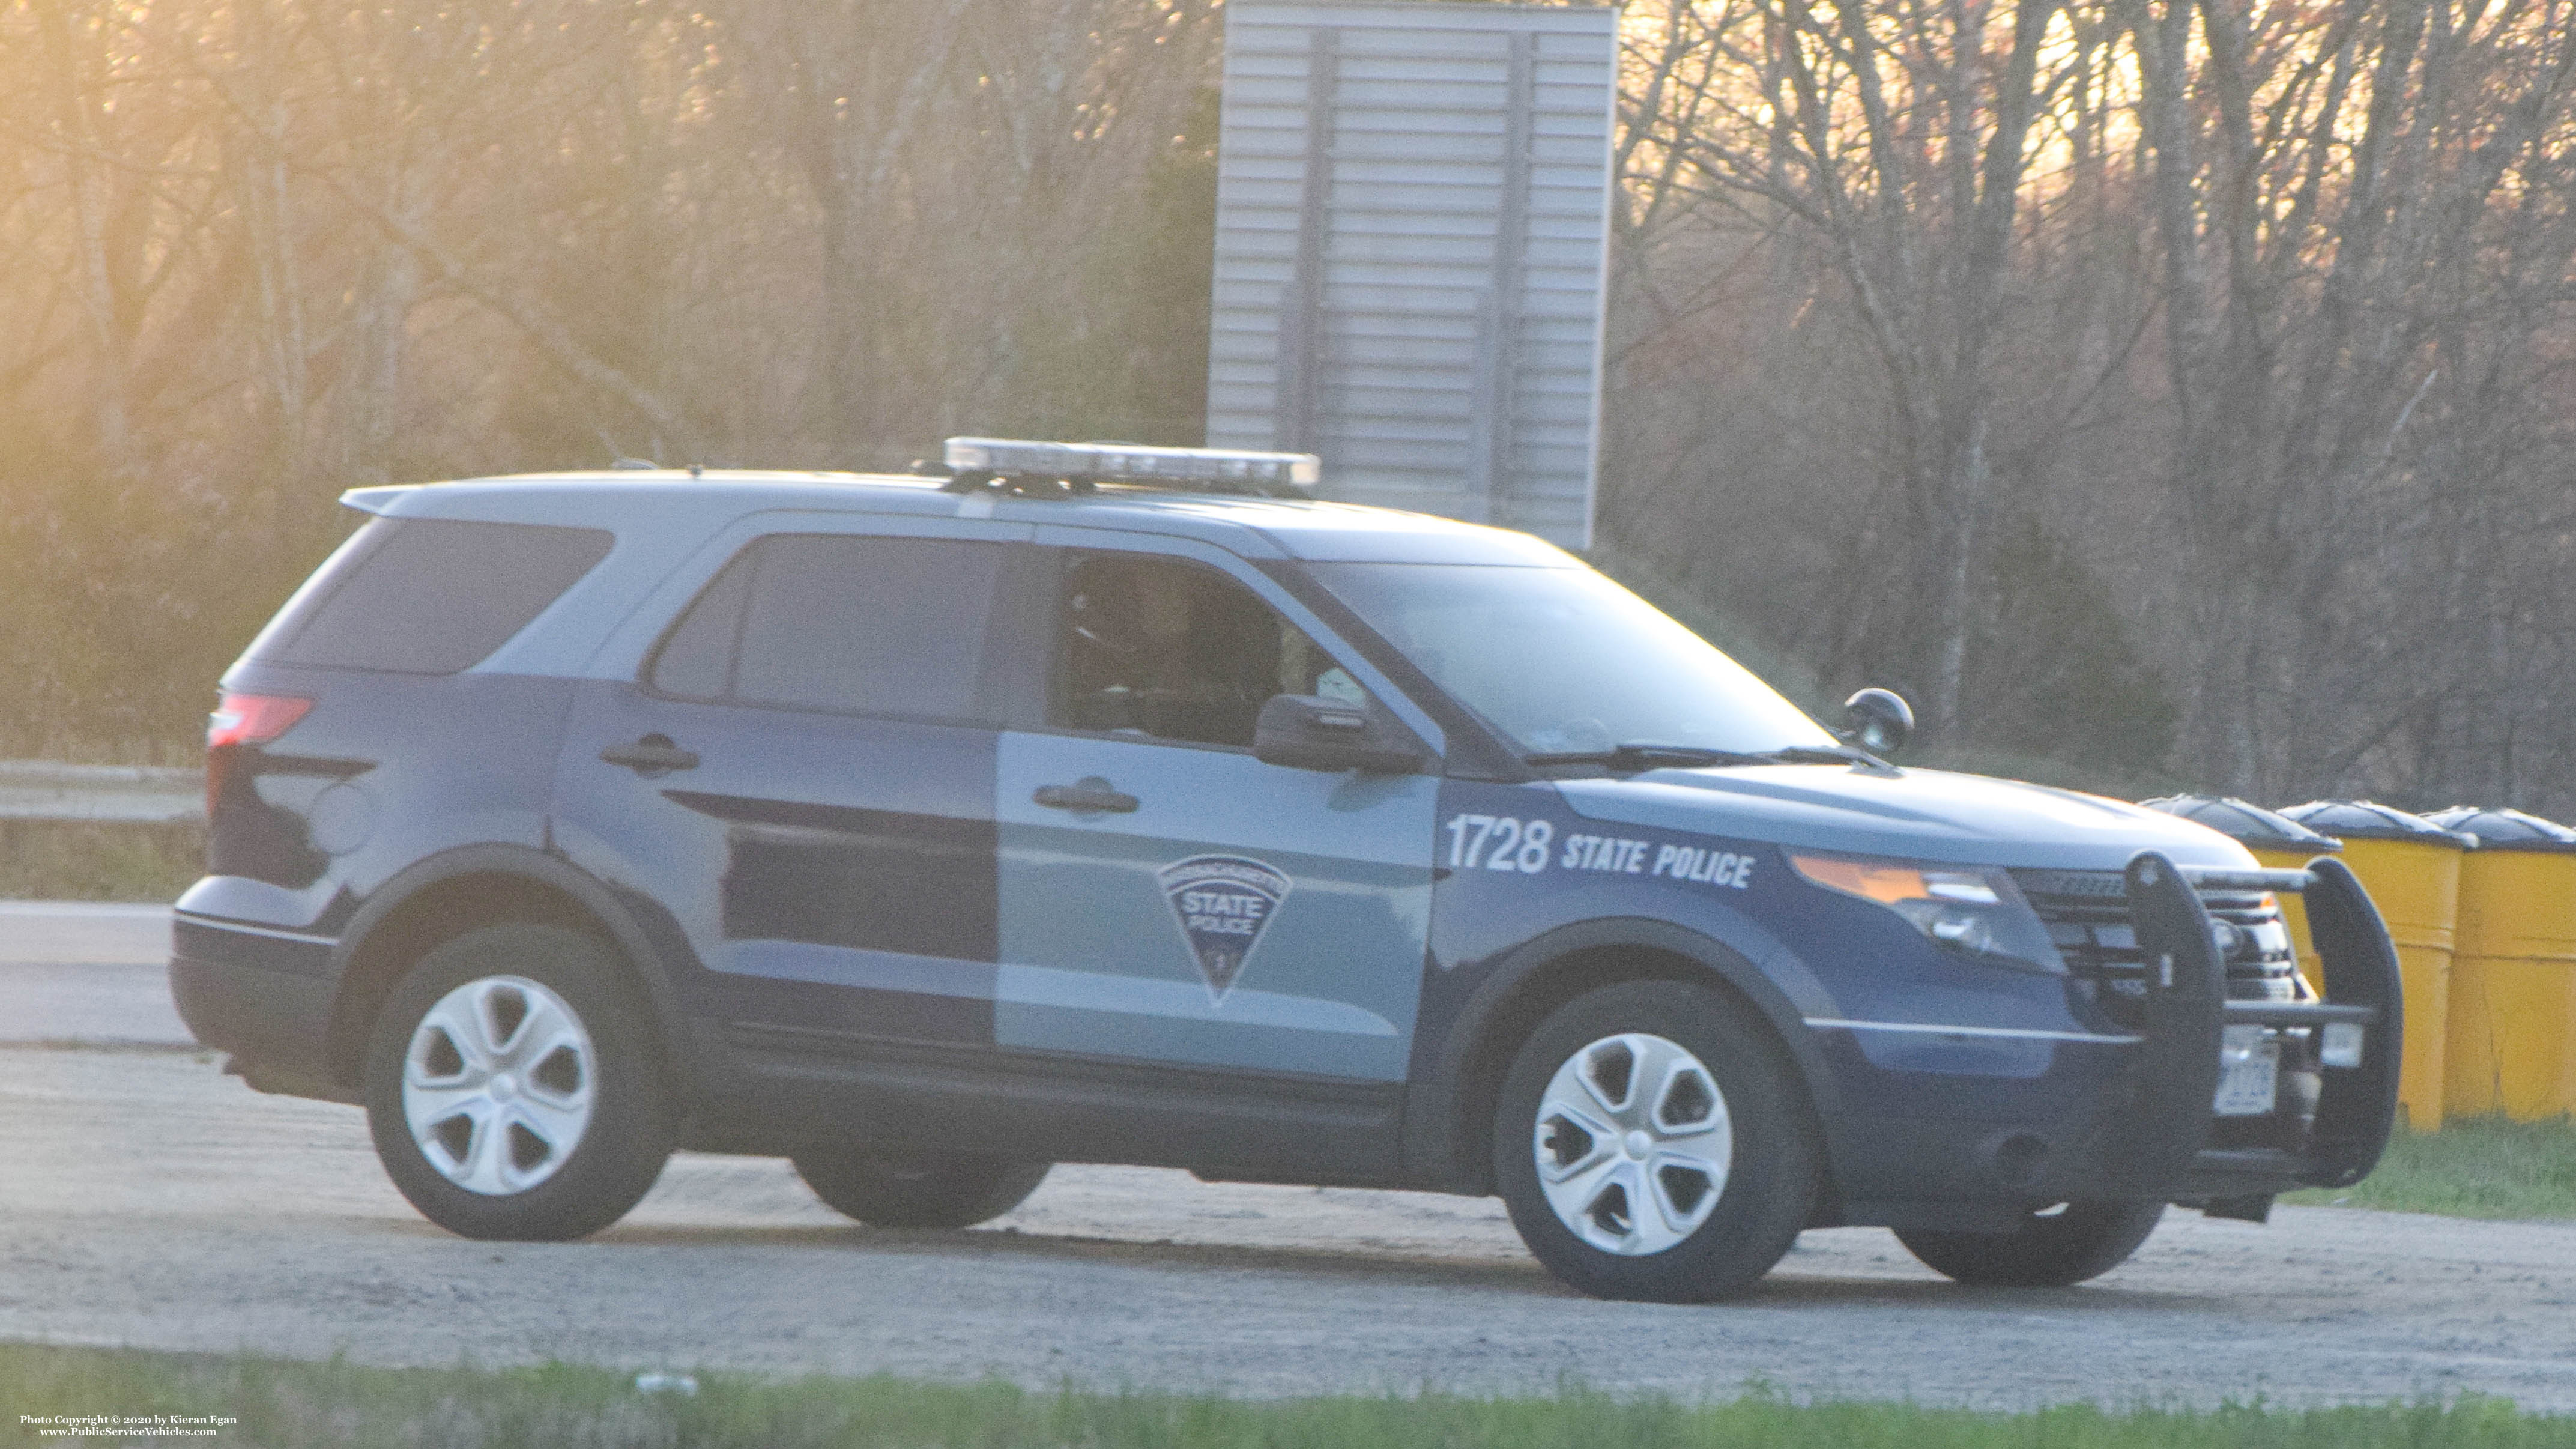 A photo  of Massachusetts State Police
            Cruiser 1728, a 2013 Ford Police Interceptor Utility             taken by Kieran Egan